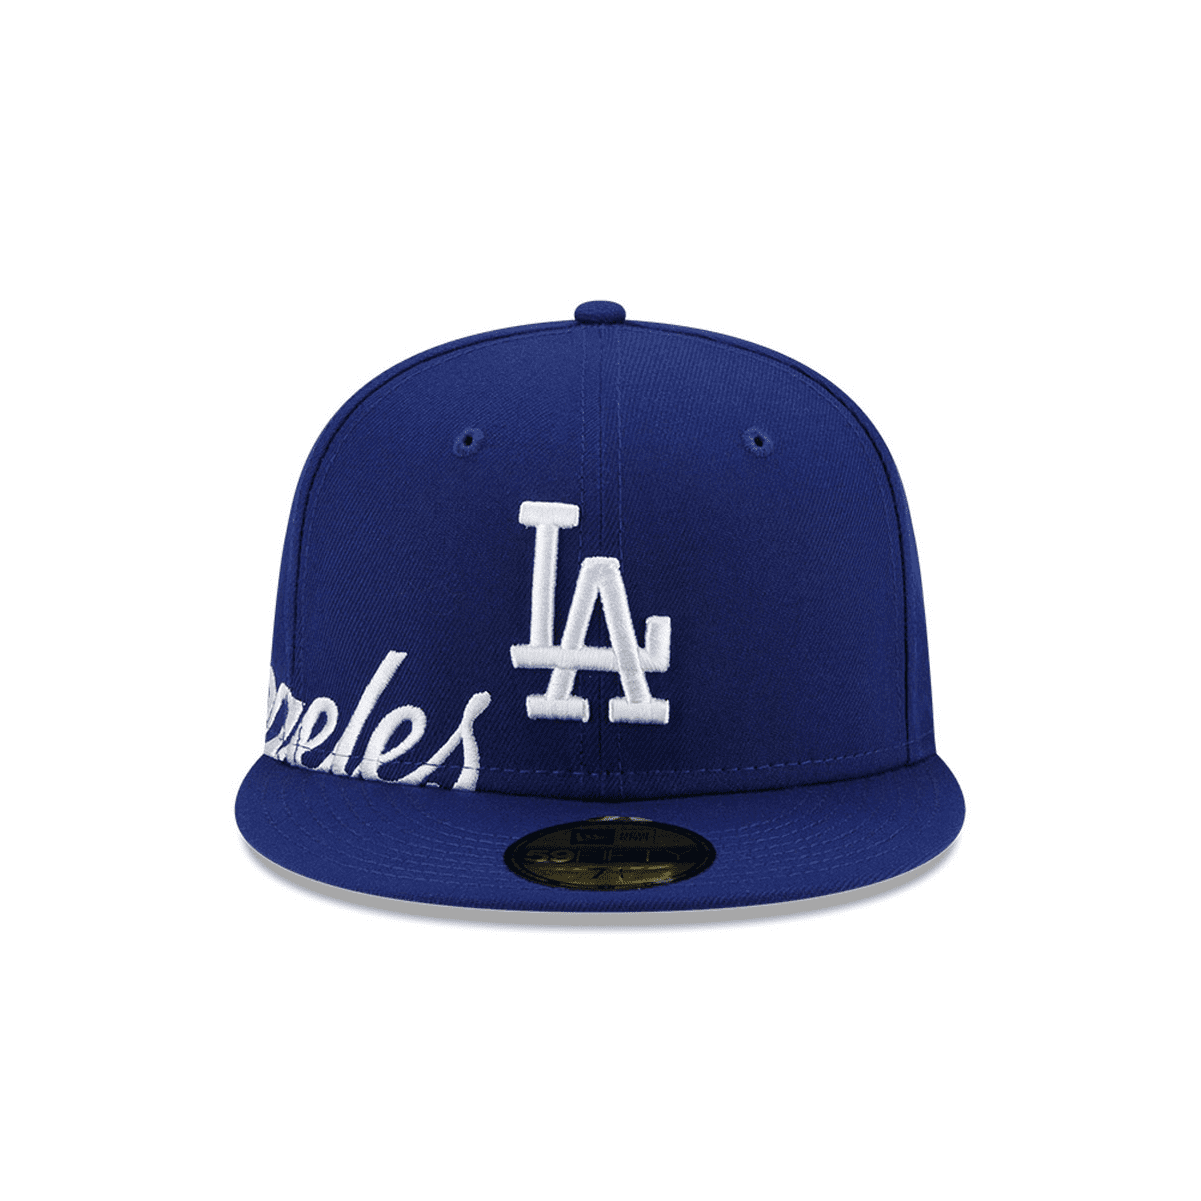 Una gorra azul de Dodgers, 5 combinaciones inesperadas – New Era Cap México